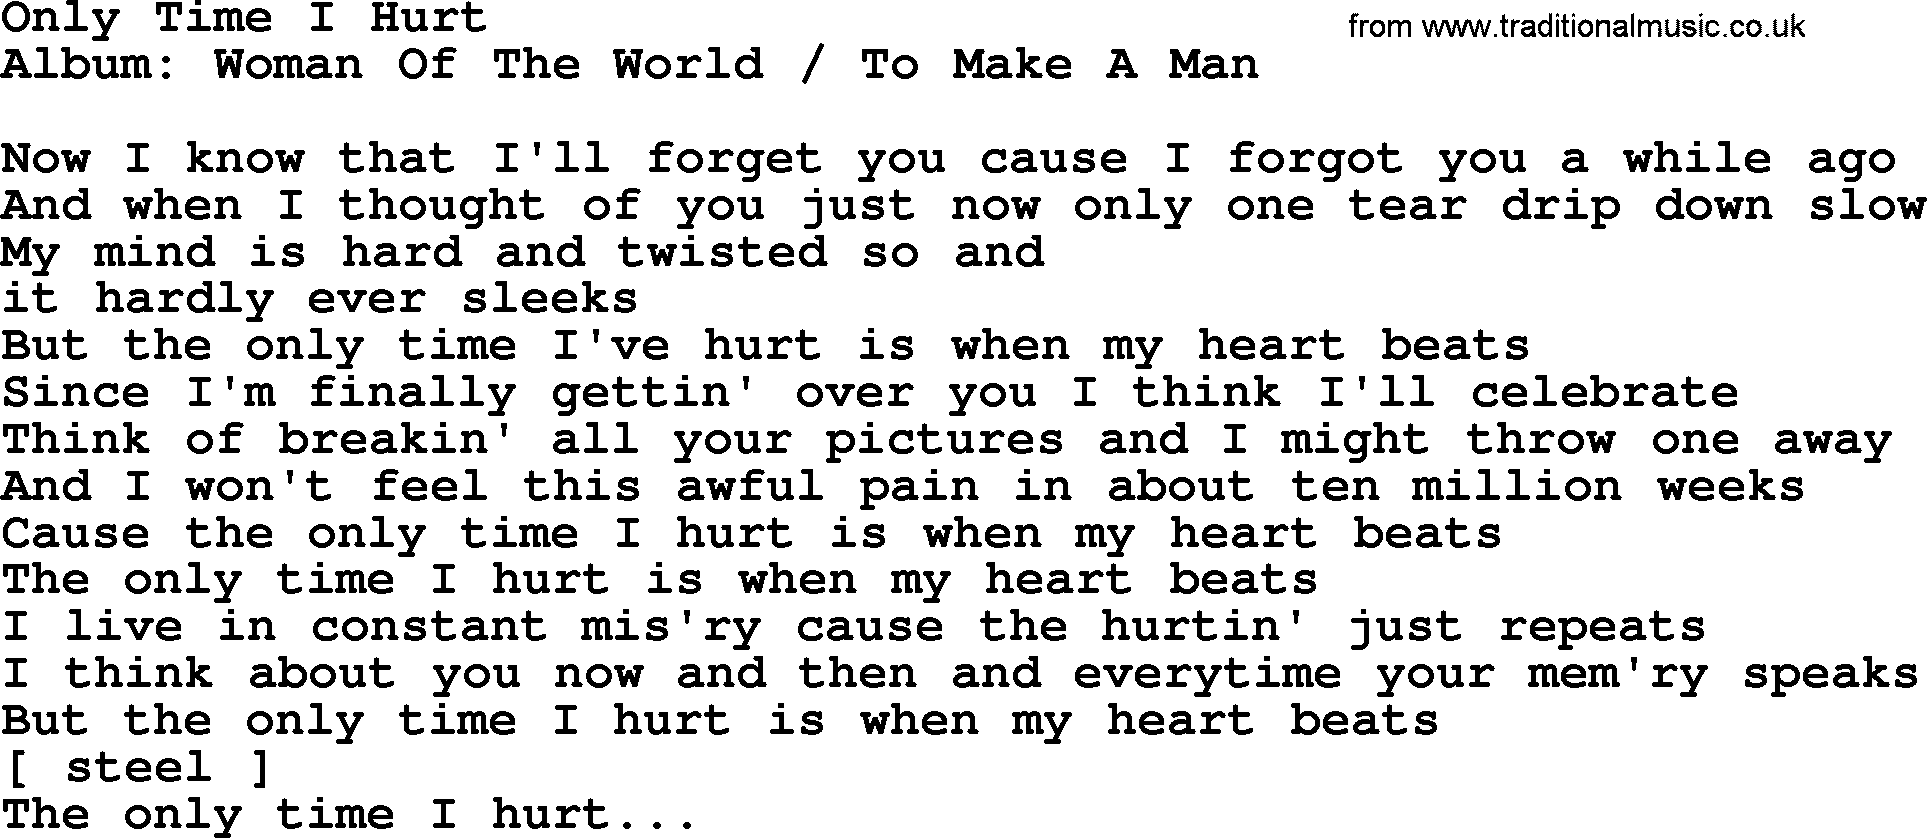 Loretta Lynn song: Only Time I Hurt lyrics